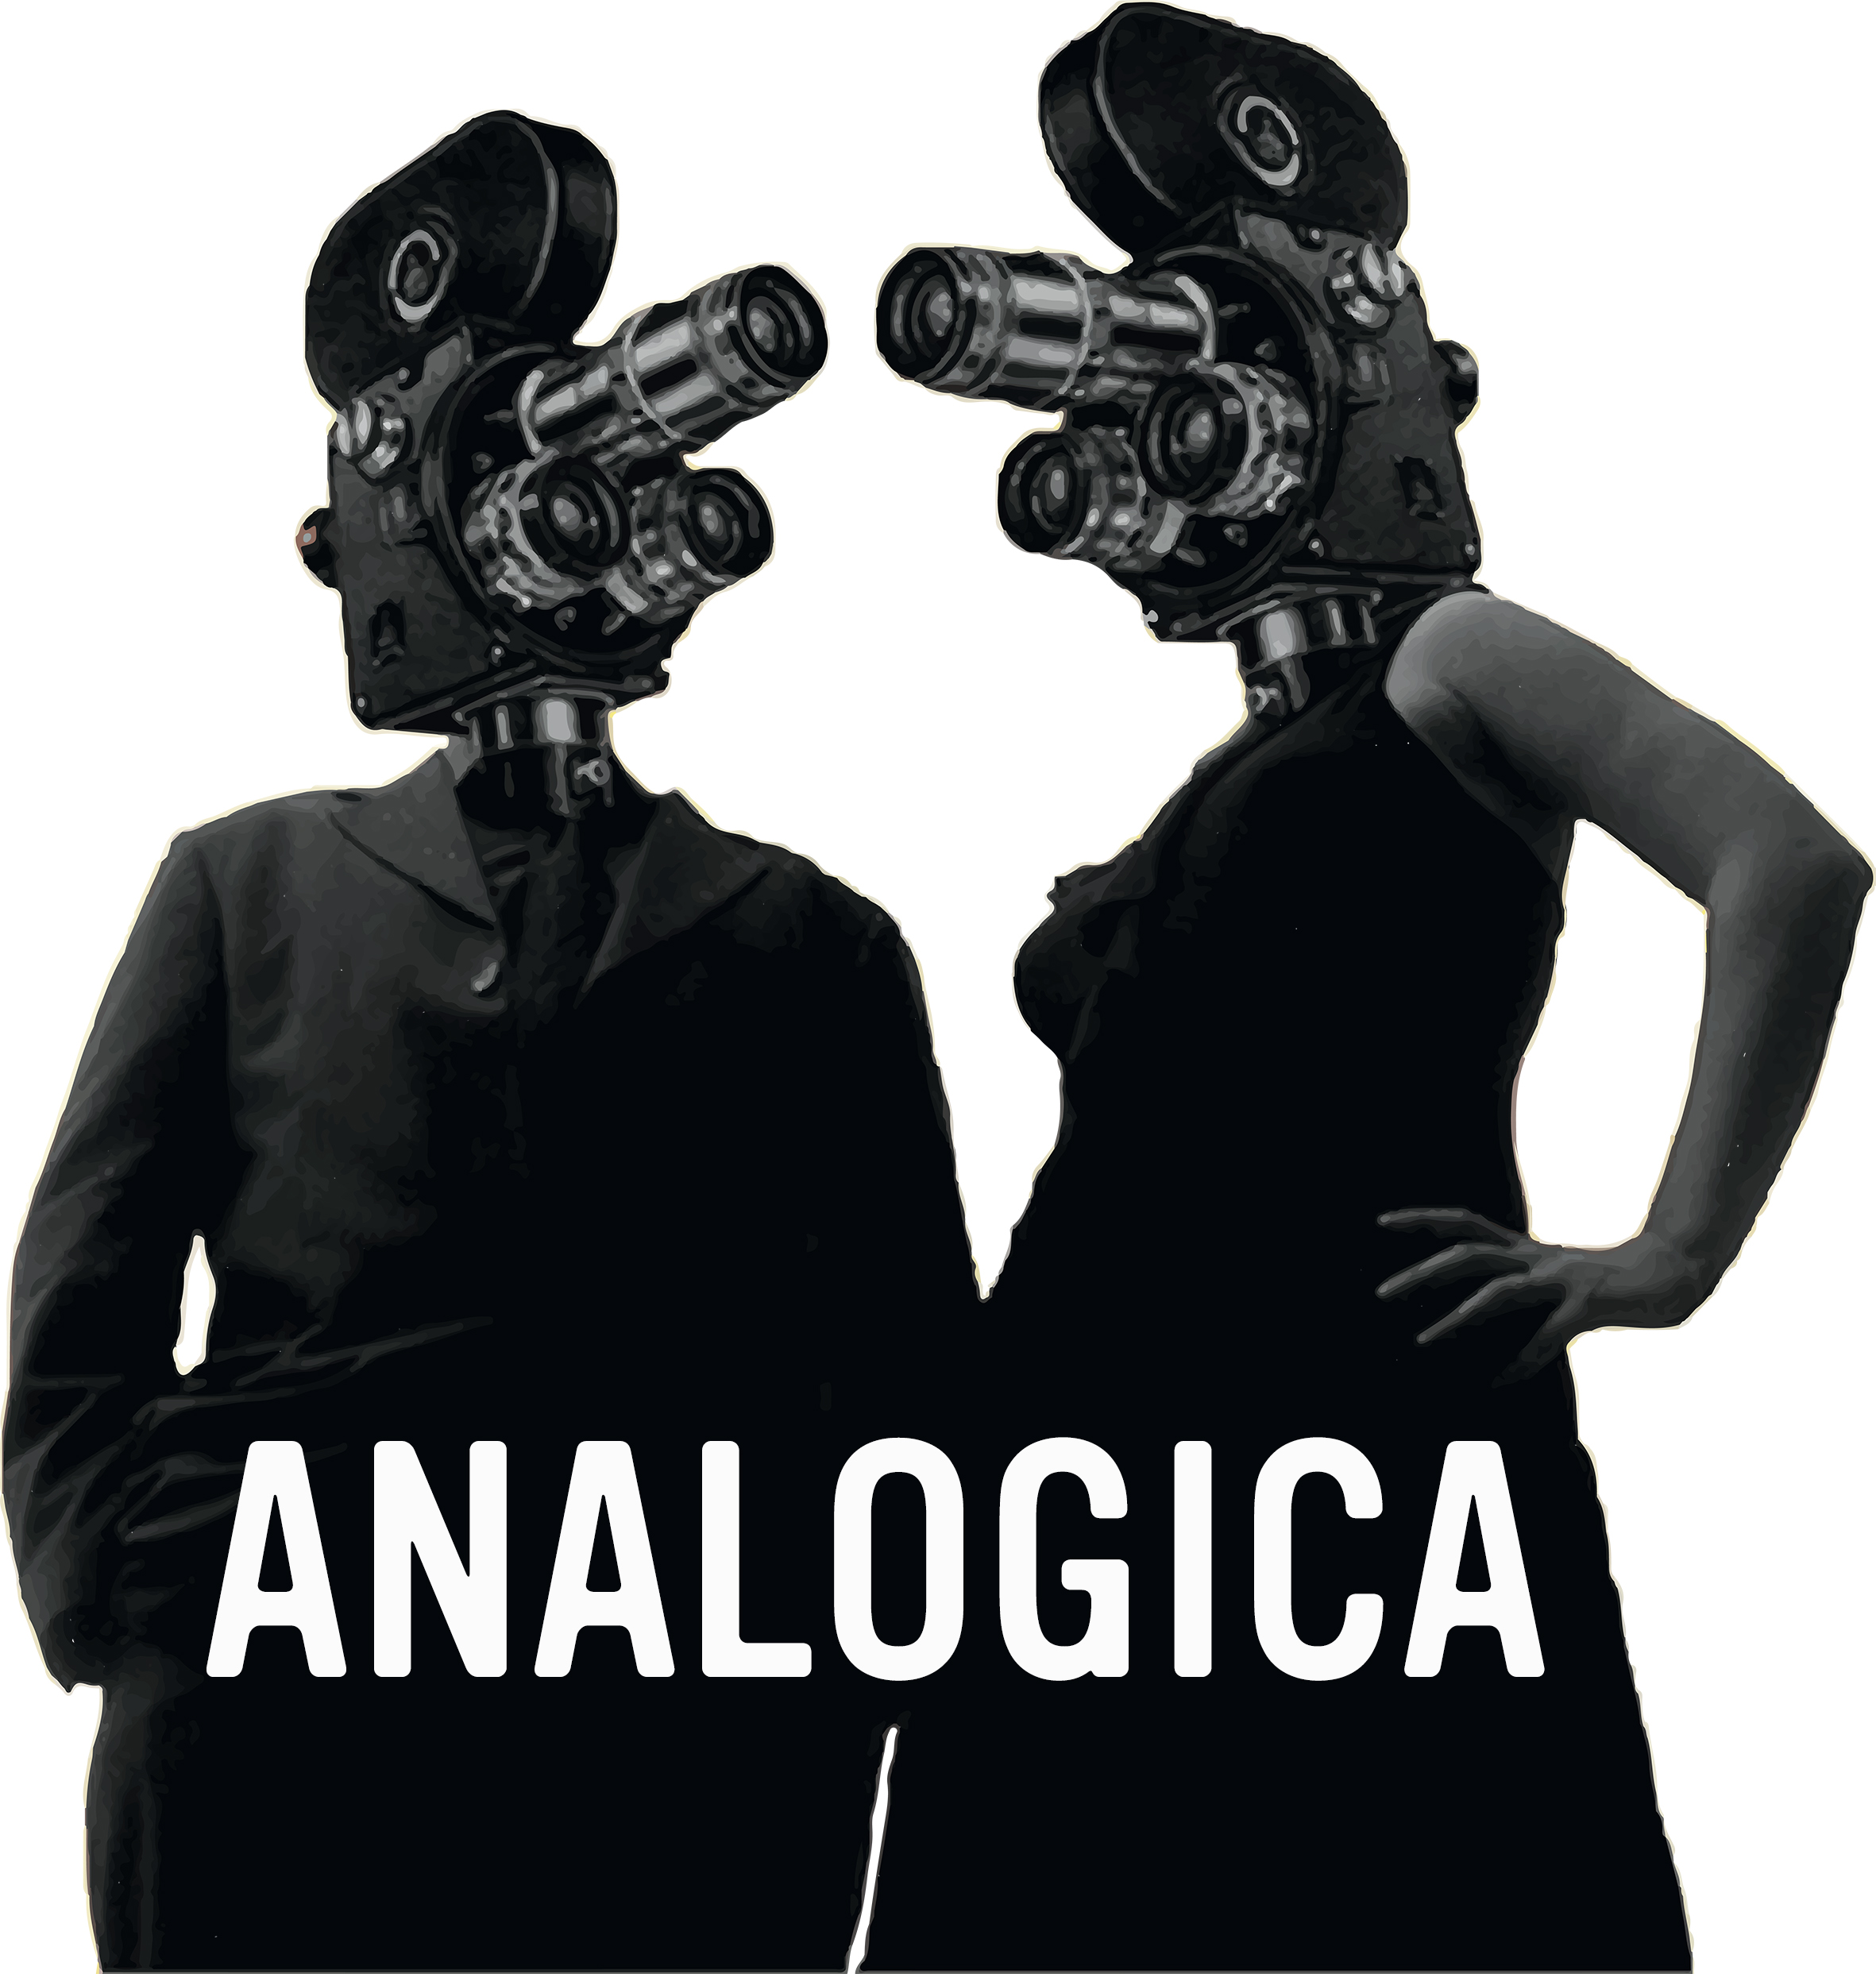 Analogica logo